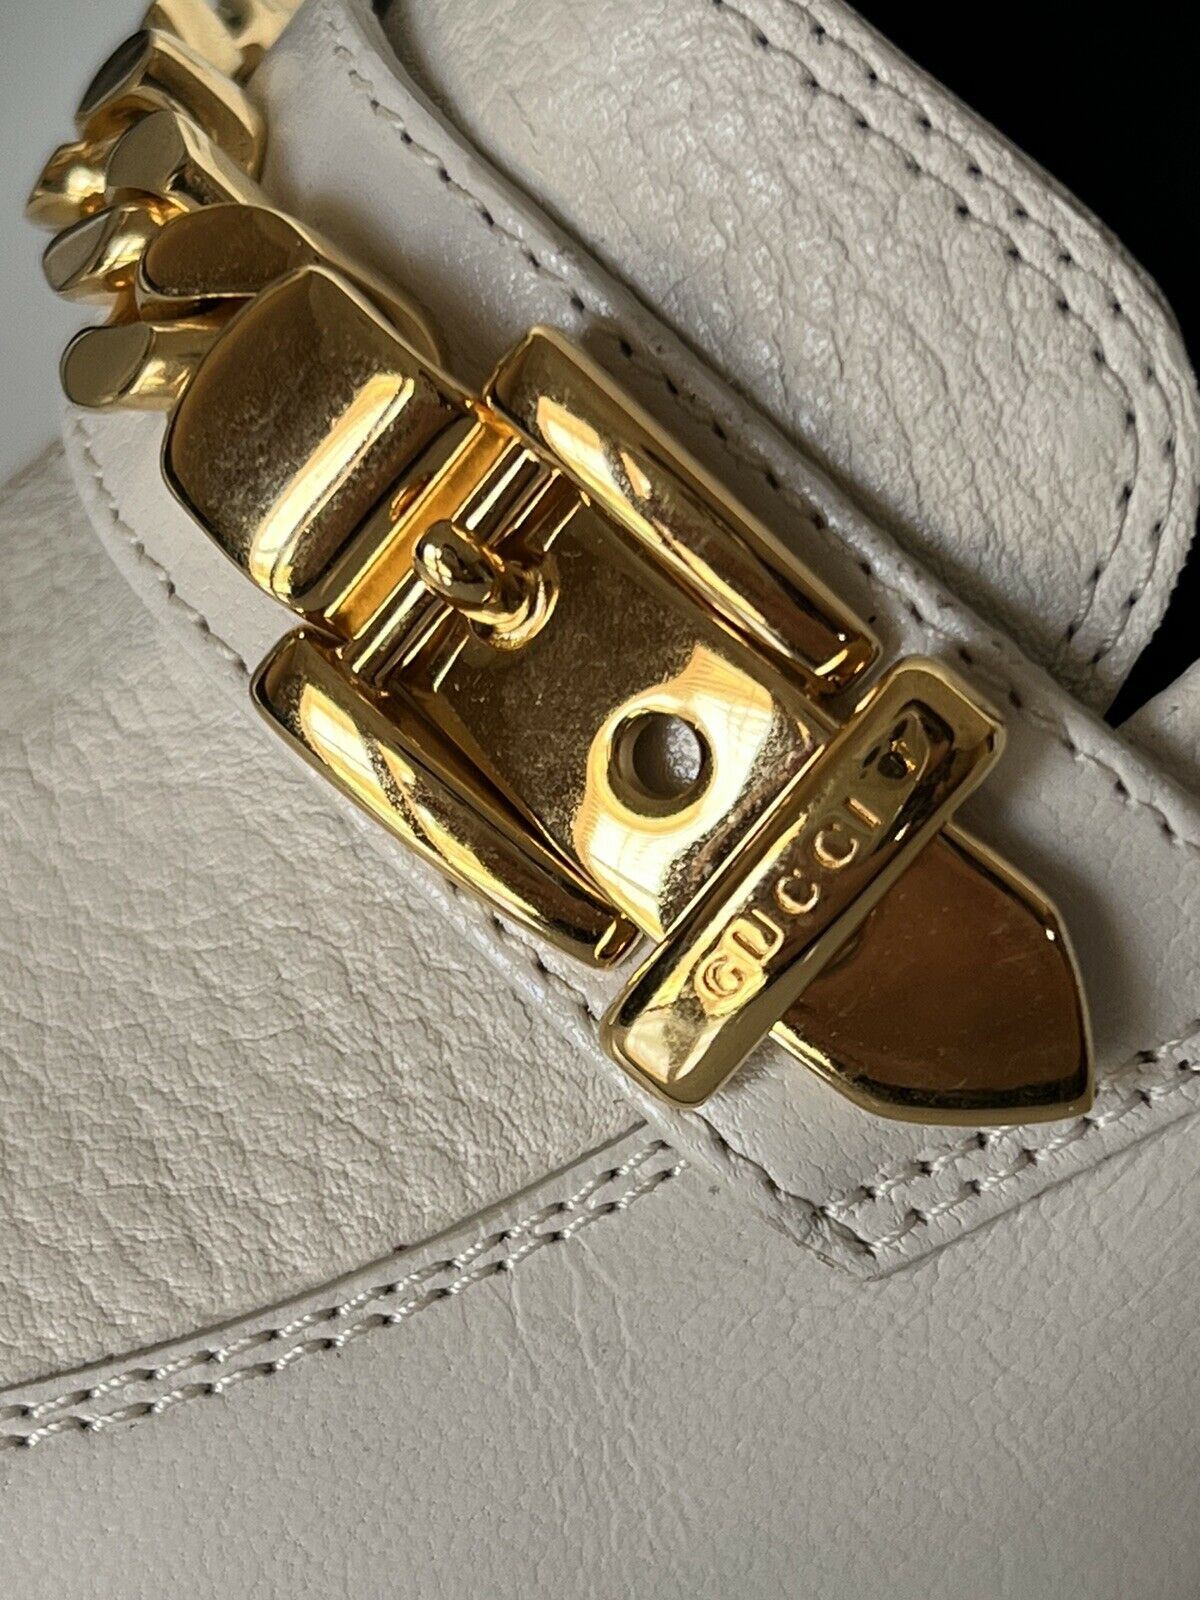 NIB Gucci Leather Mystic White Pump Kalbslederschuhe 7,5 US (37,5 Euro) 626767